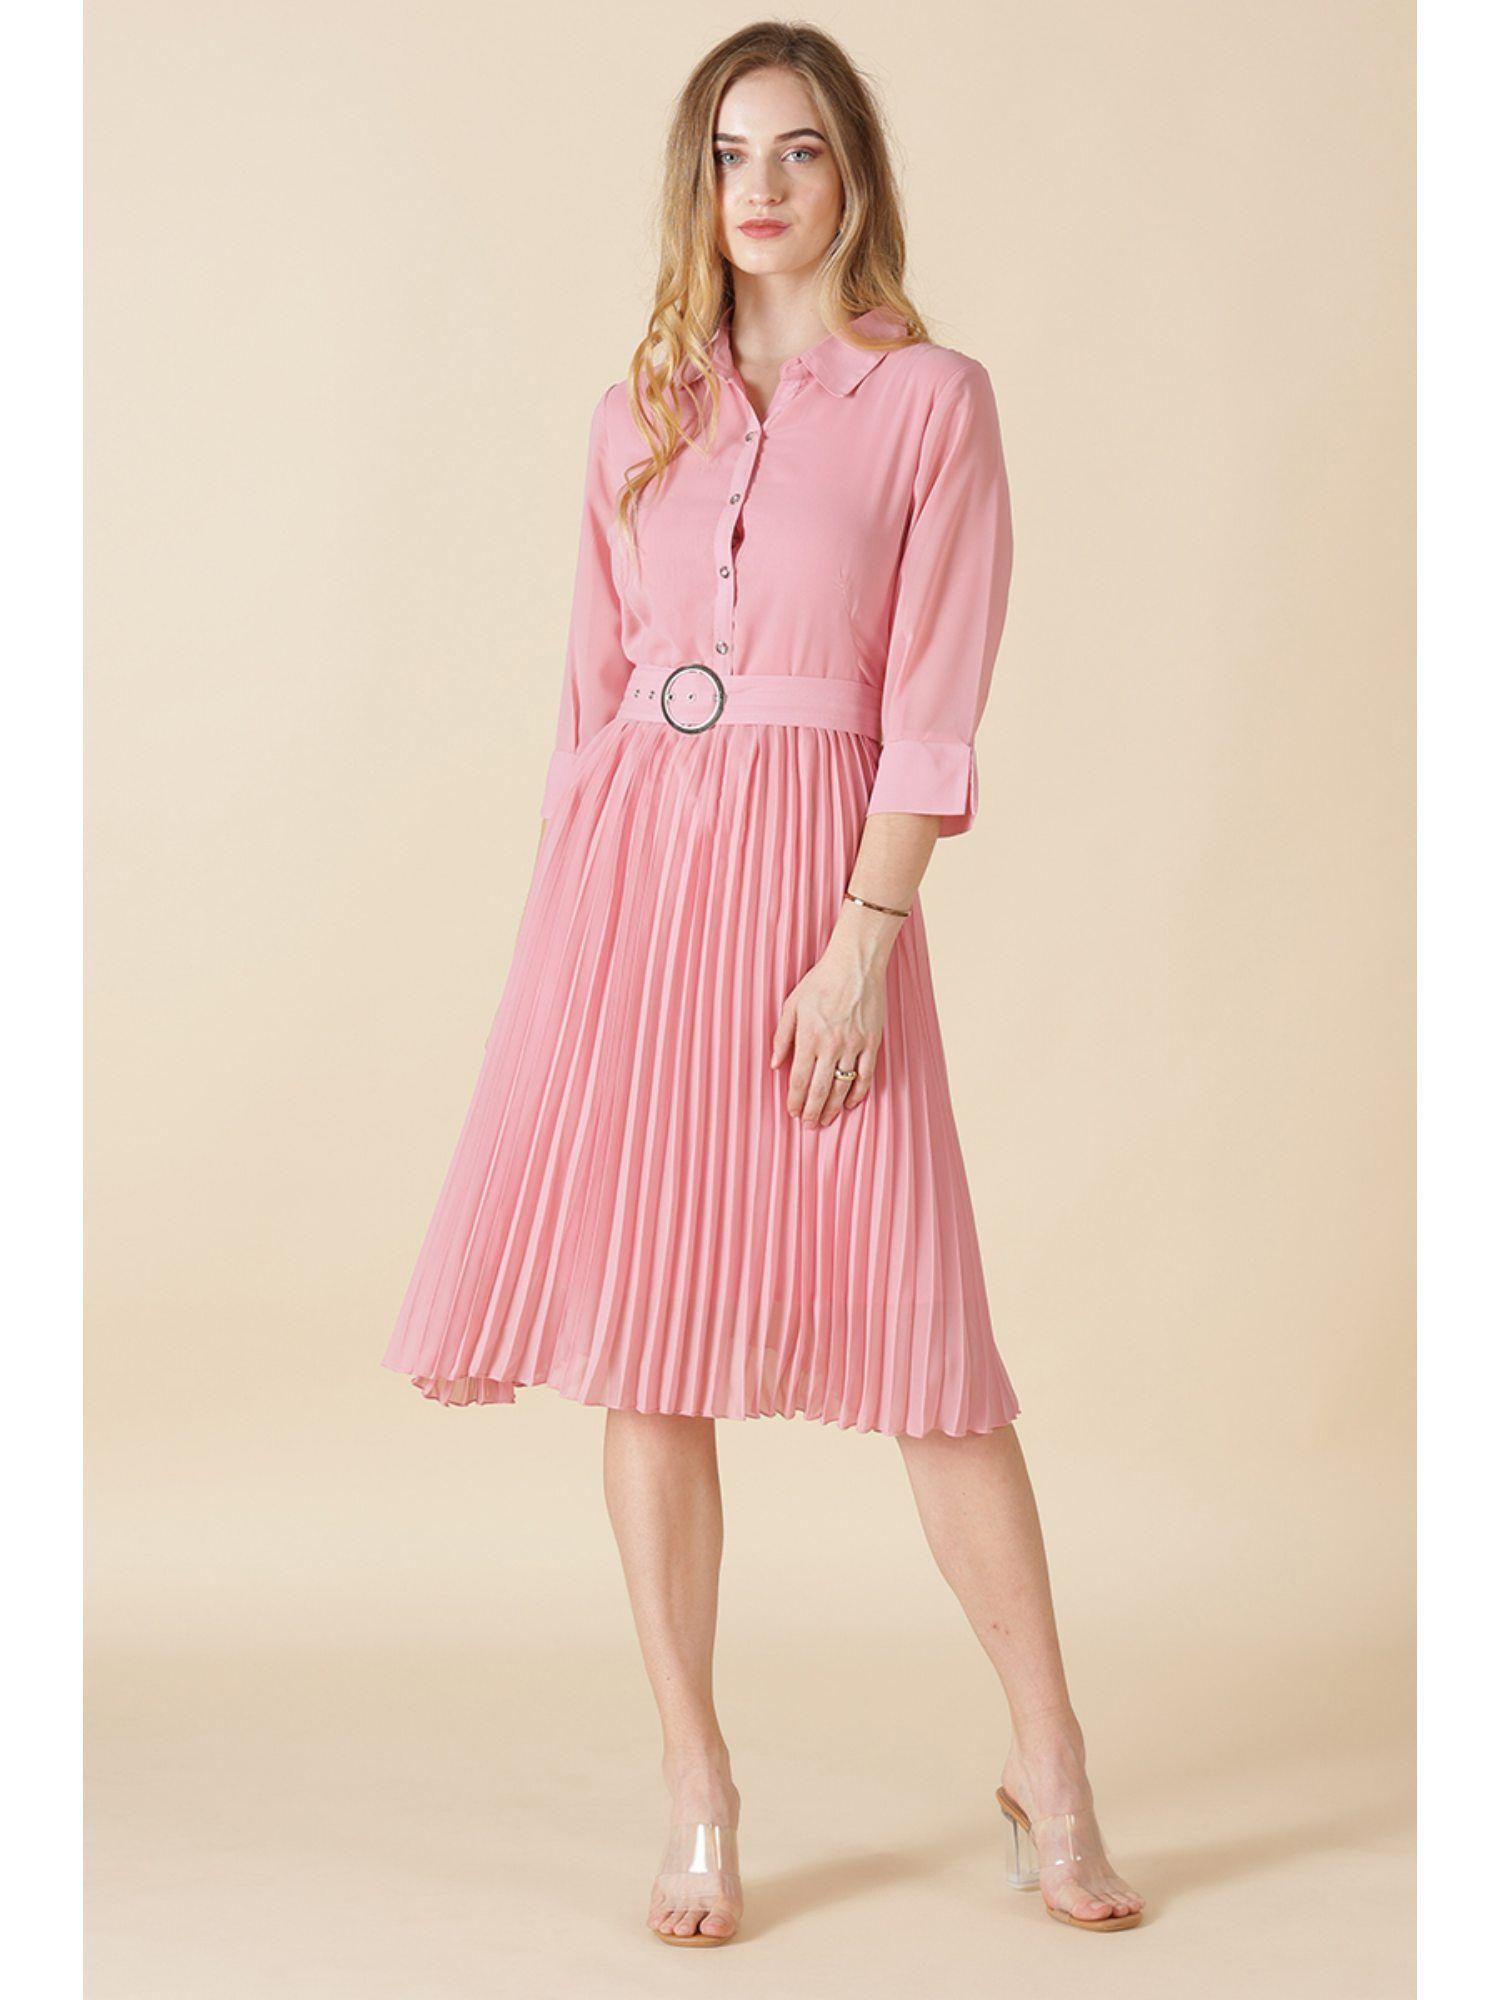 pink georgette dress with belt